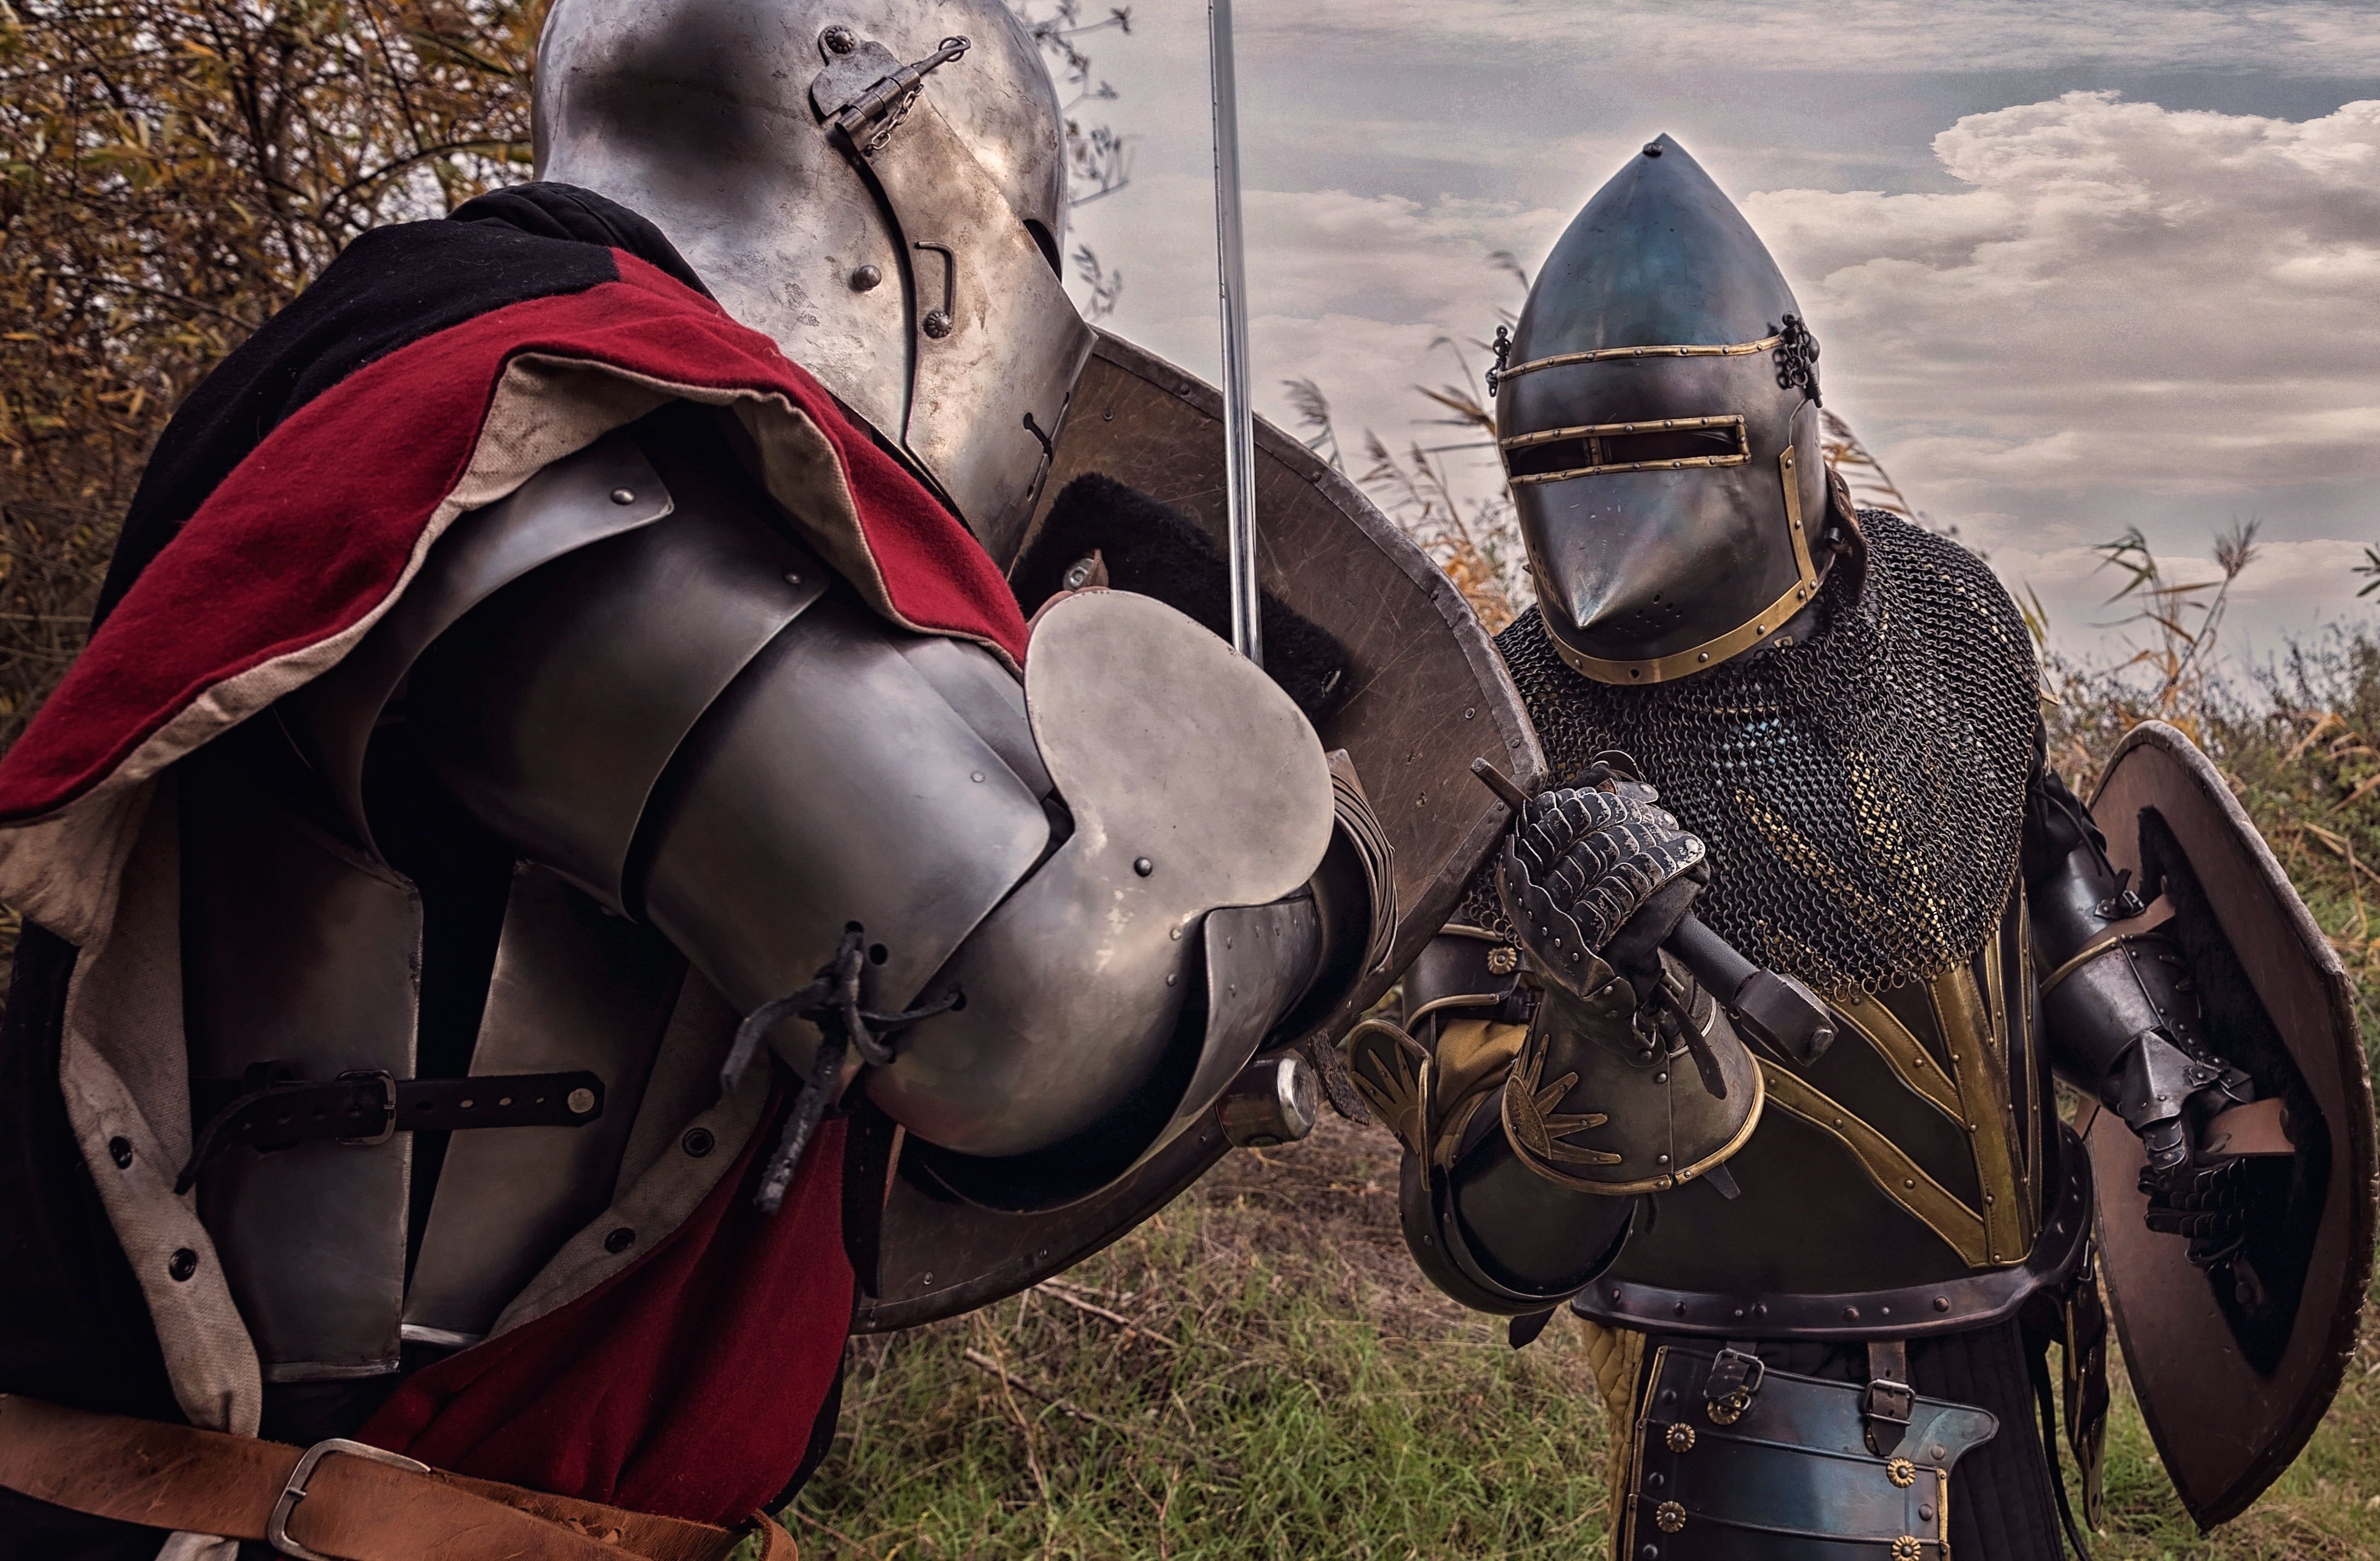 gray knight #metal #background #armor #swords #knights #shields the fight #hats K #wallpaper #hdwallpap. Grey knights, Warriors wallpaper, Warriors illustration